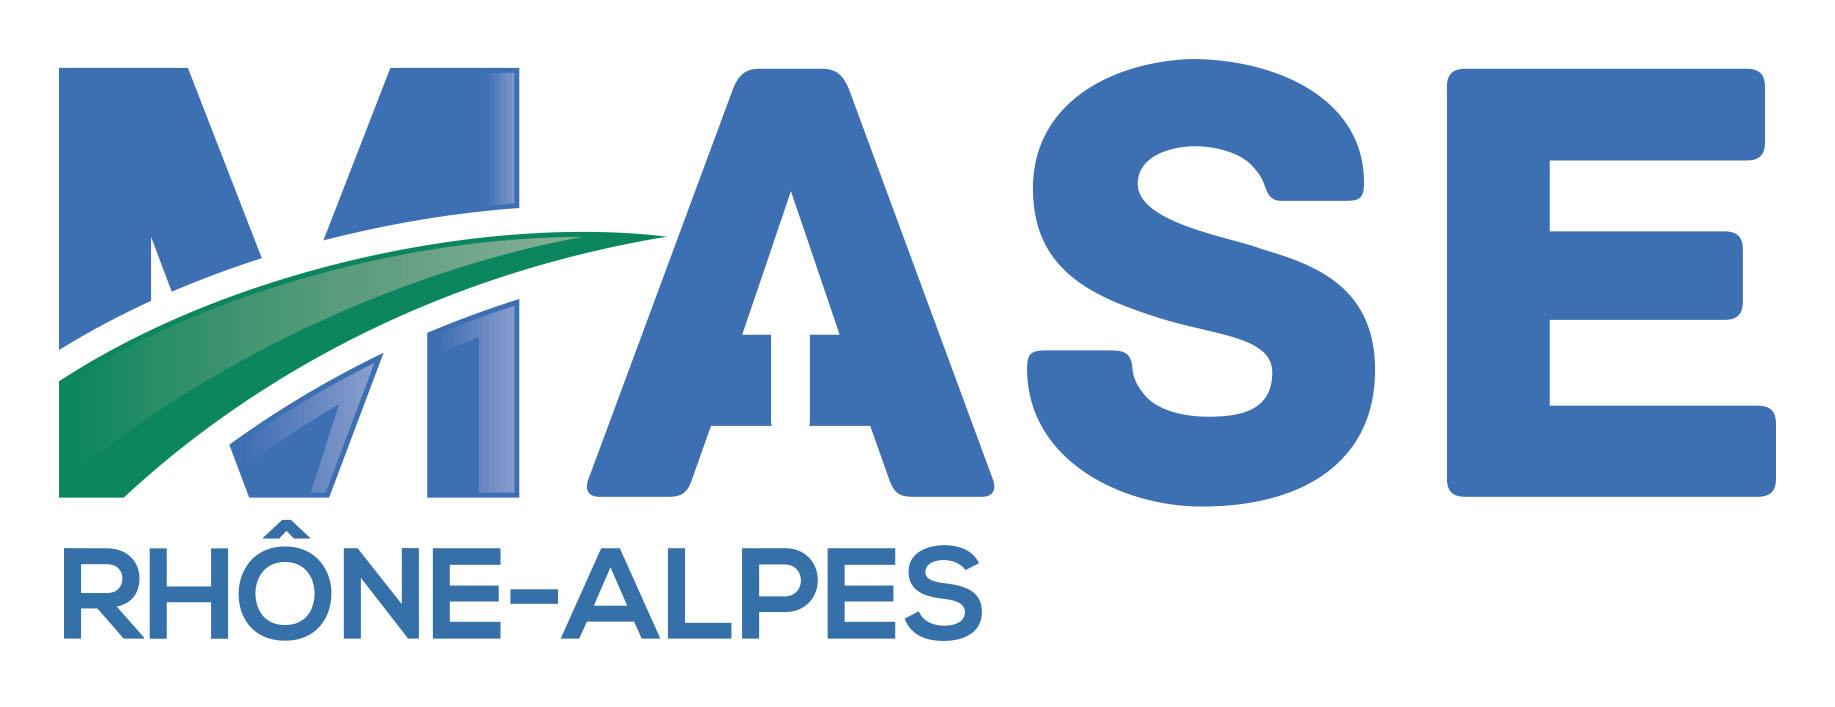 logo MASE